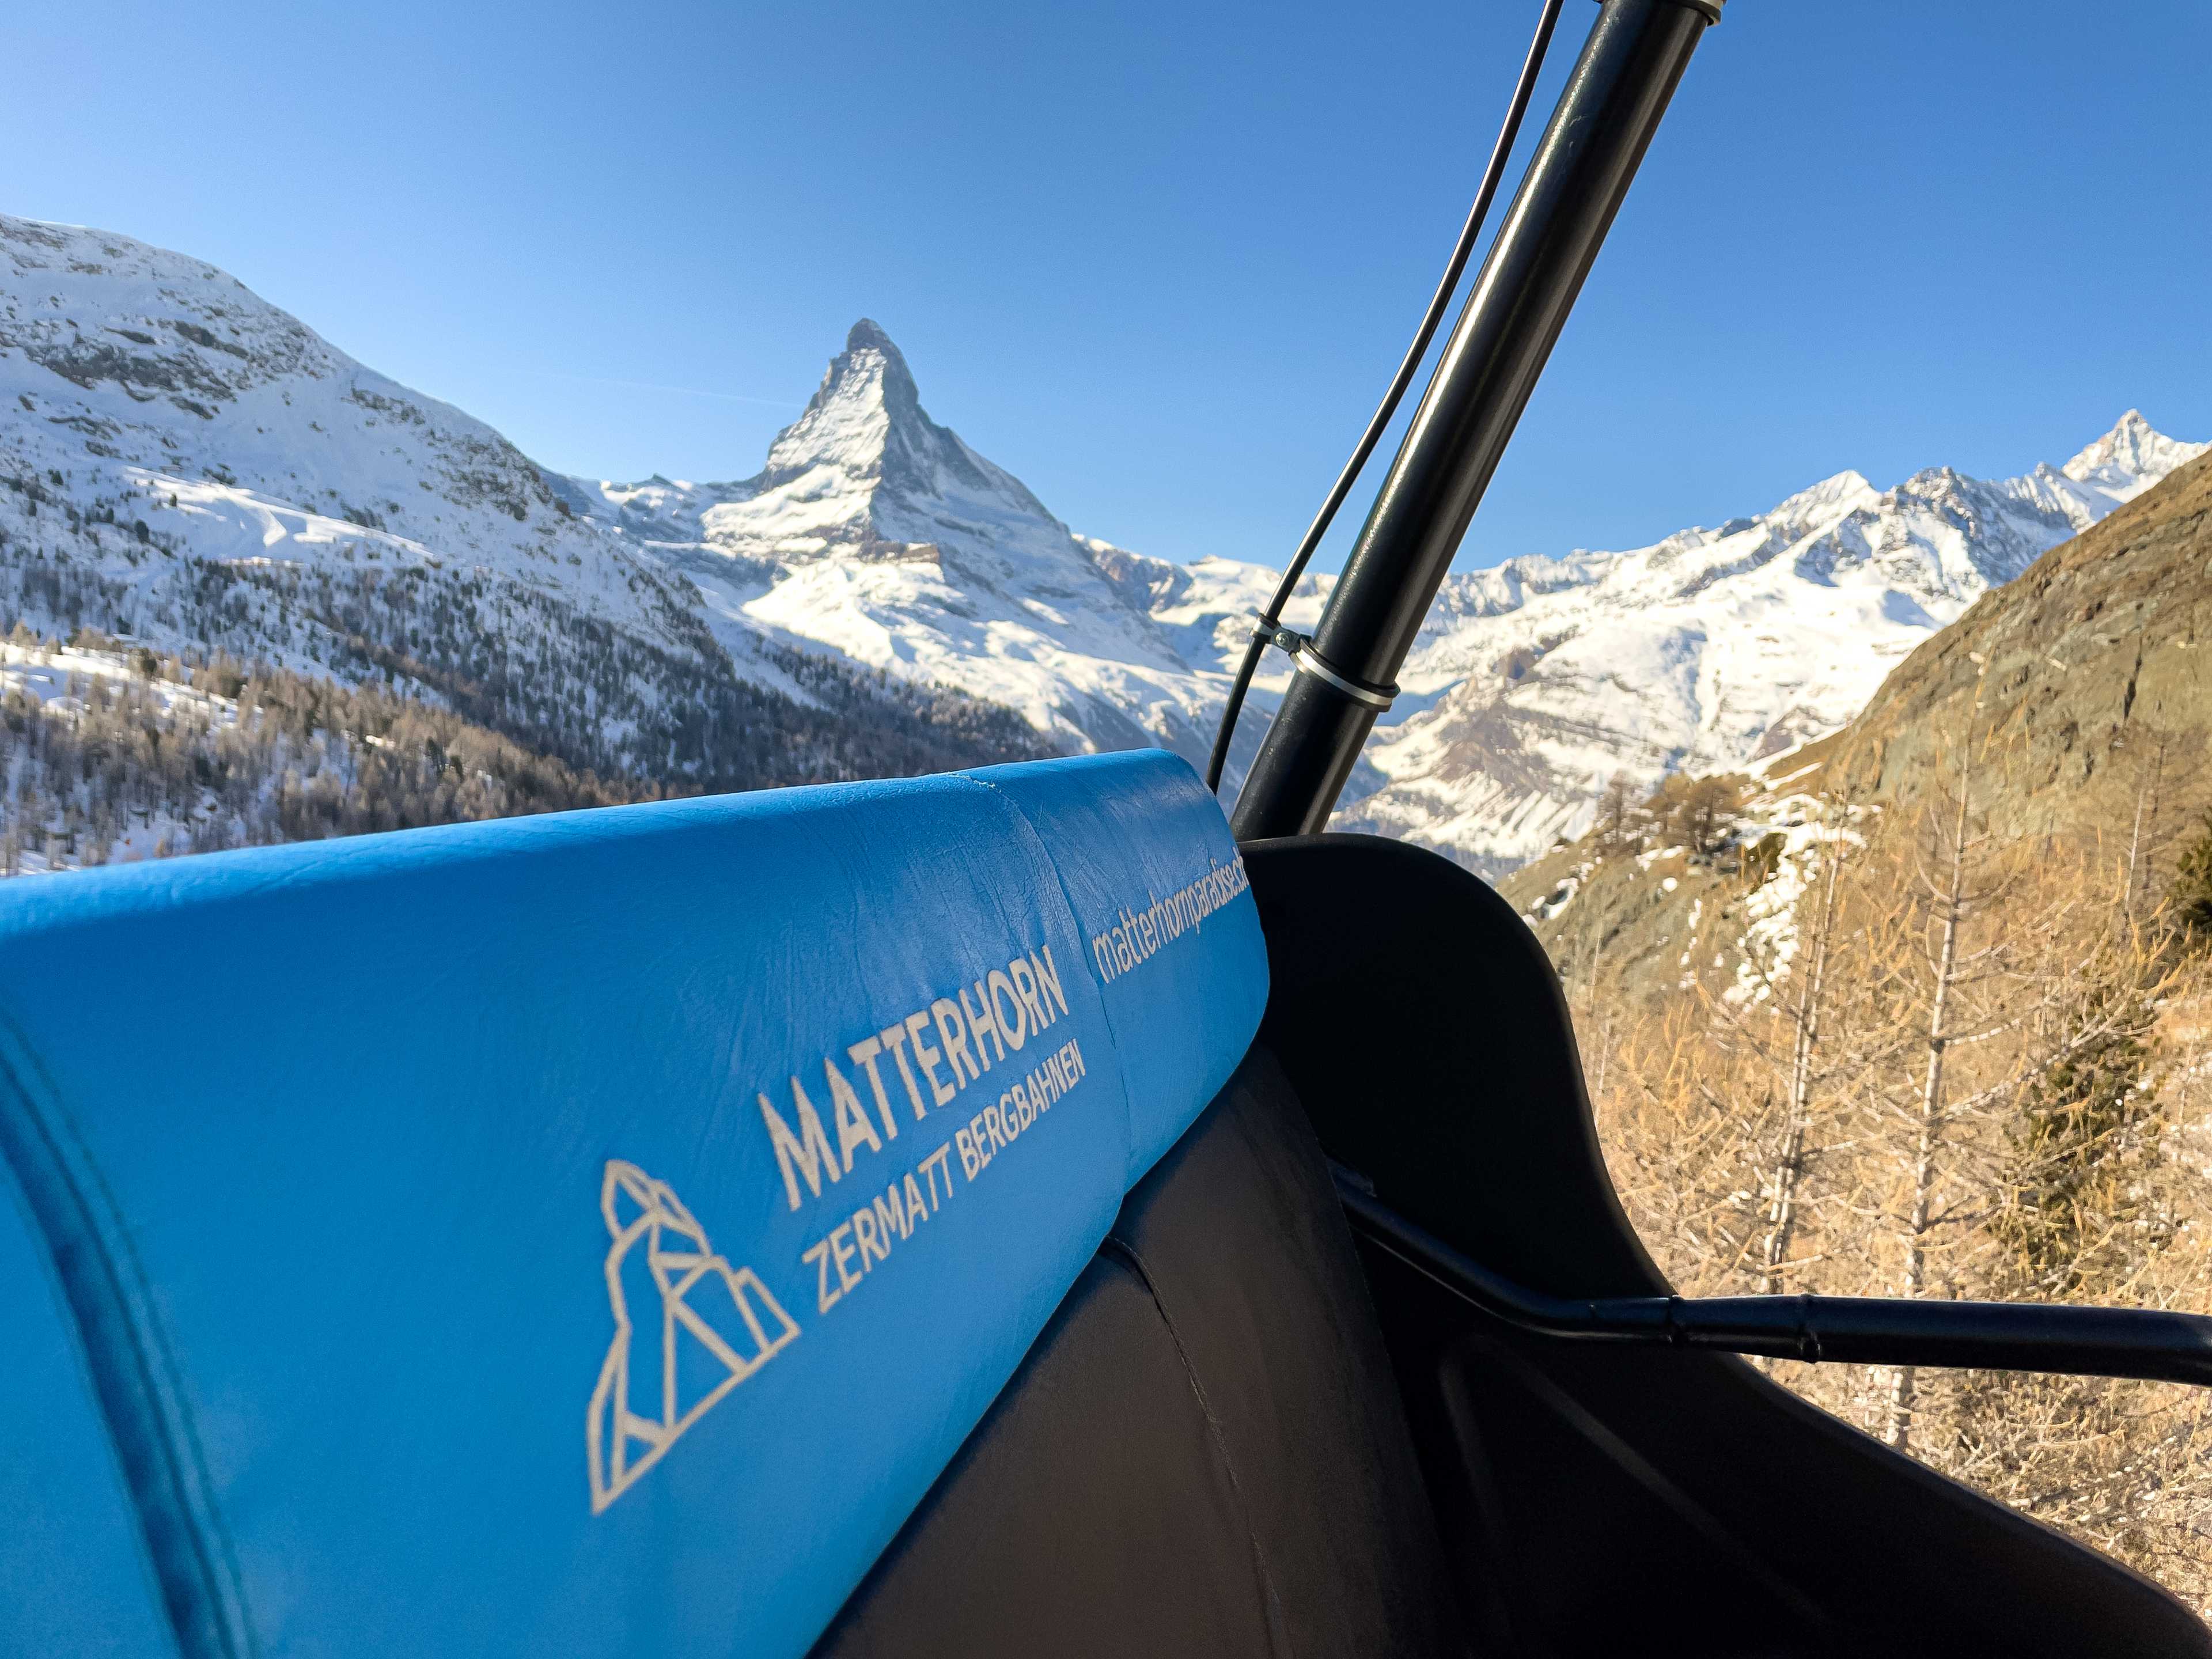 Gant-Blauherd branded chairs, Zermatt